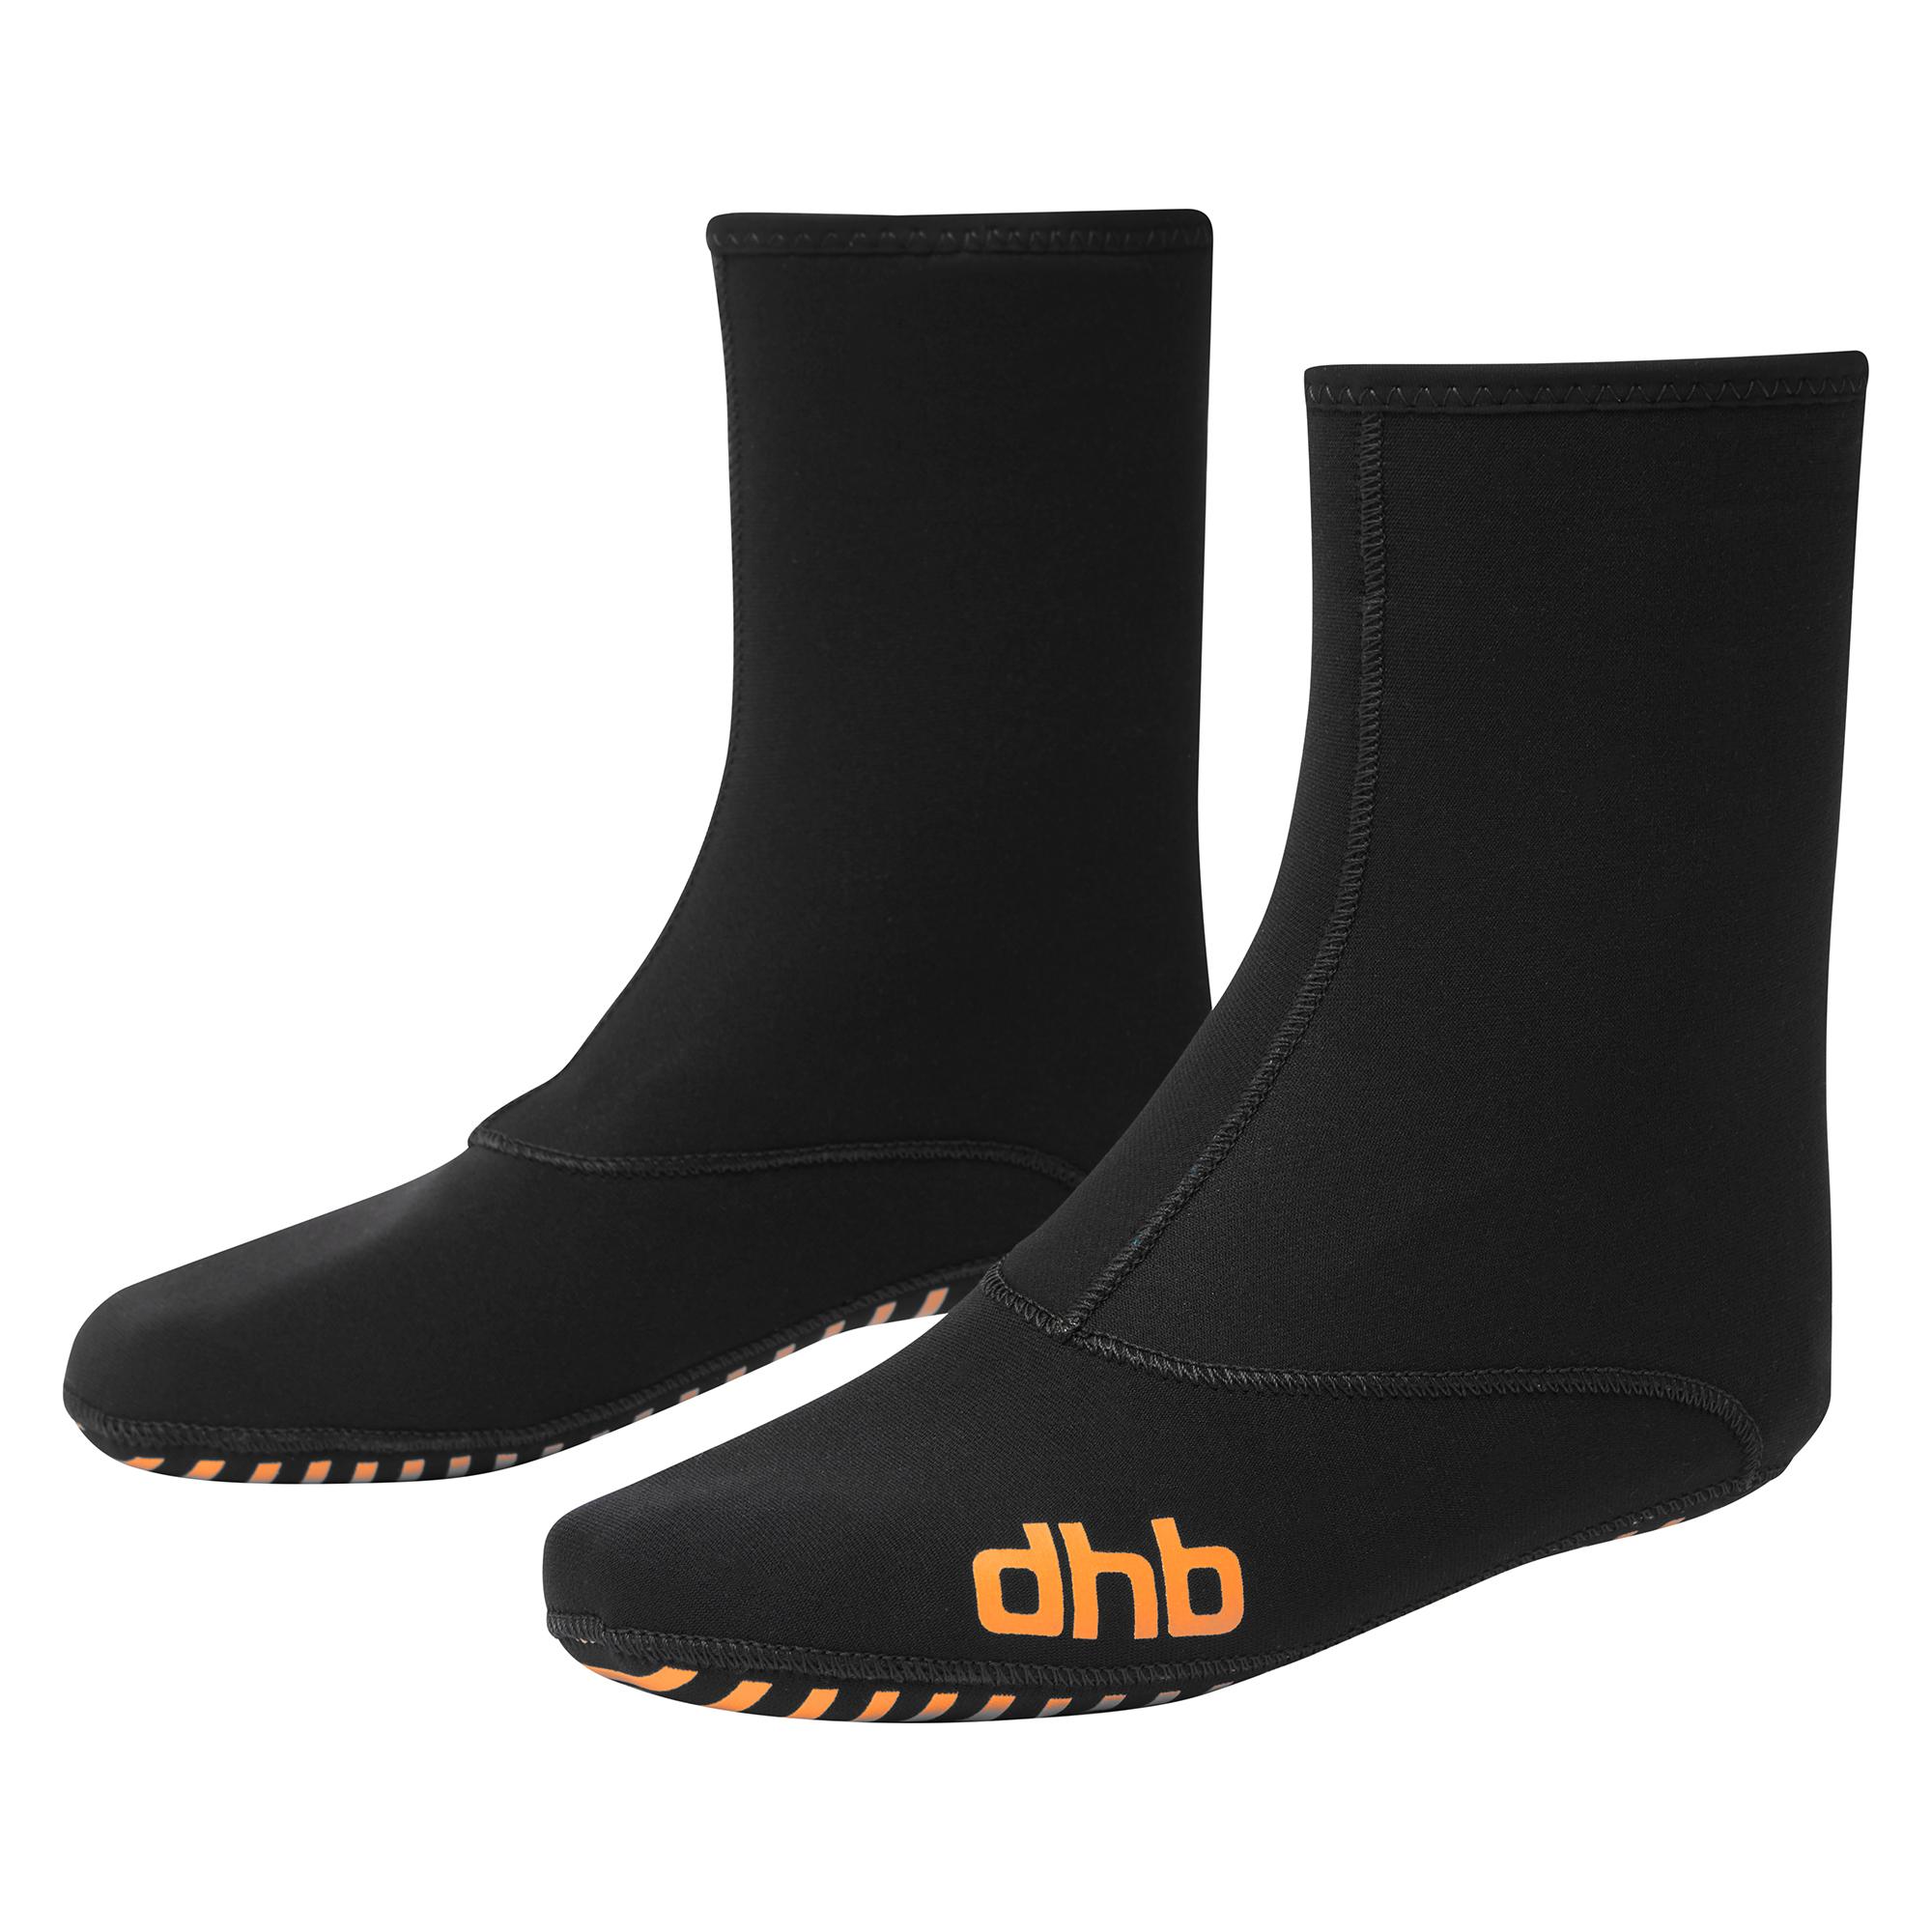 Dhb Hydron Thermal Swim Booties 2.0 - Black